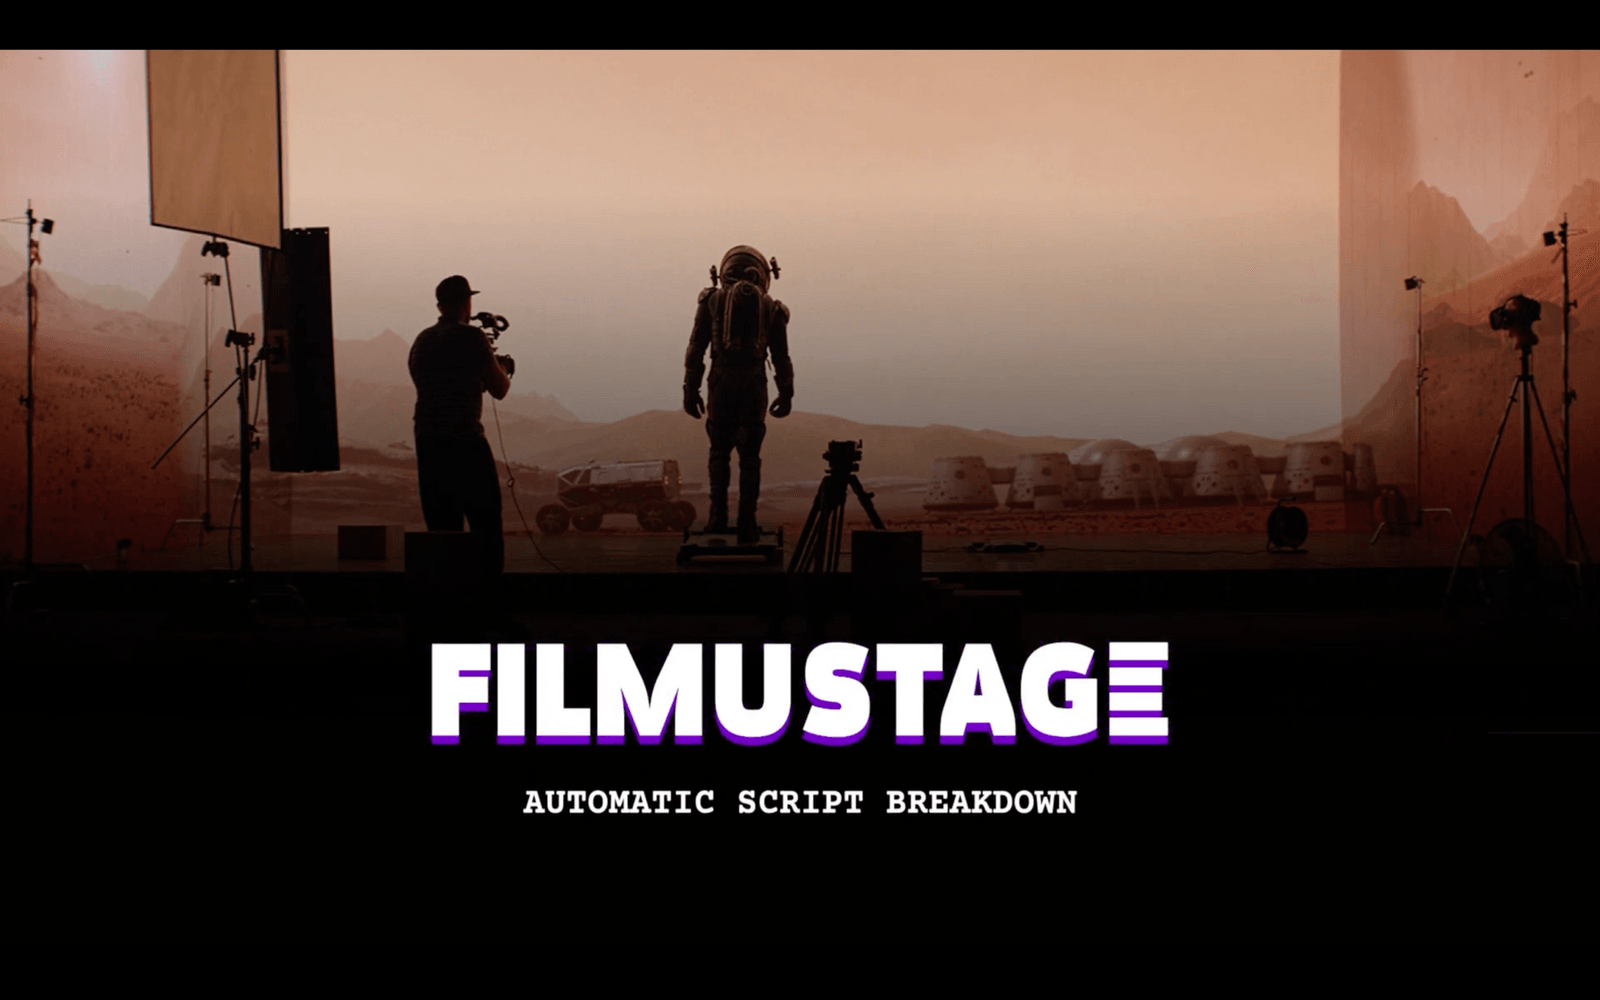 Filmustage debut at the Berlin Film Festival